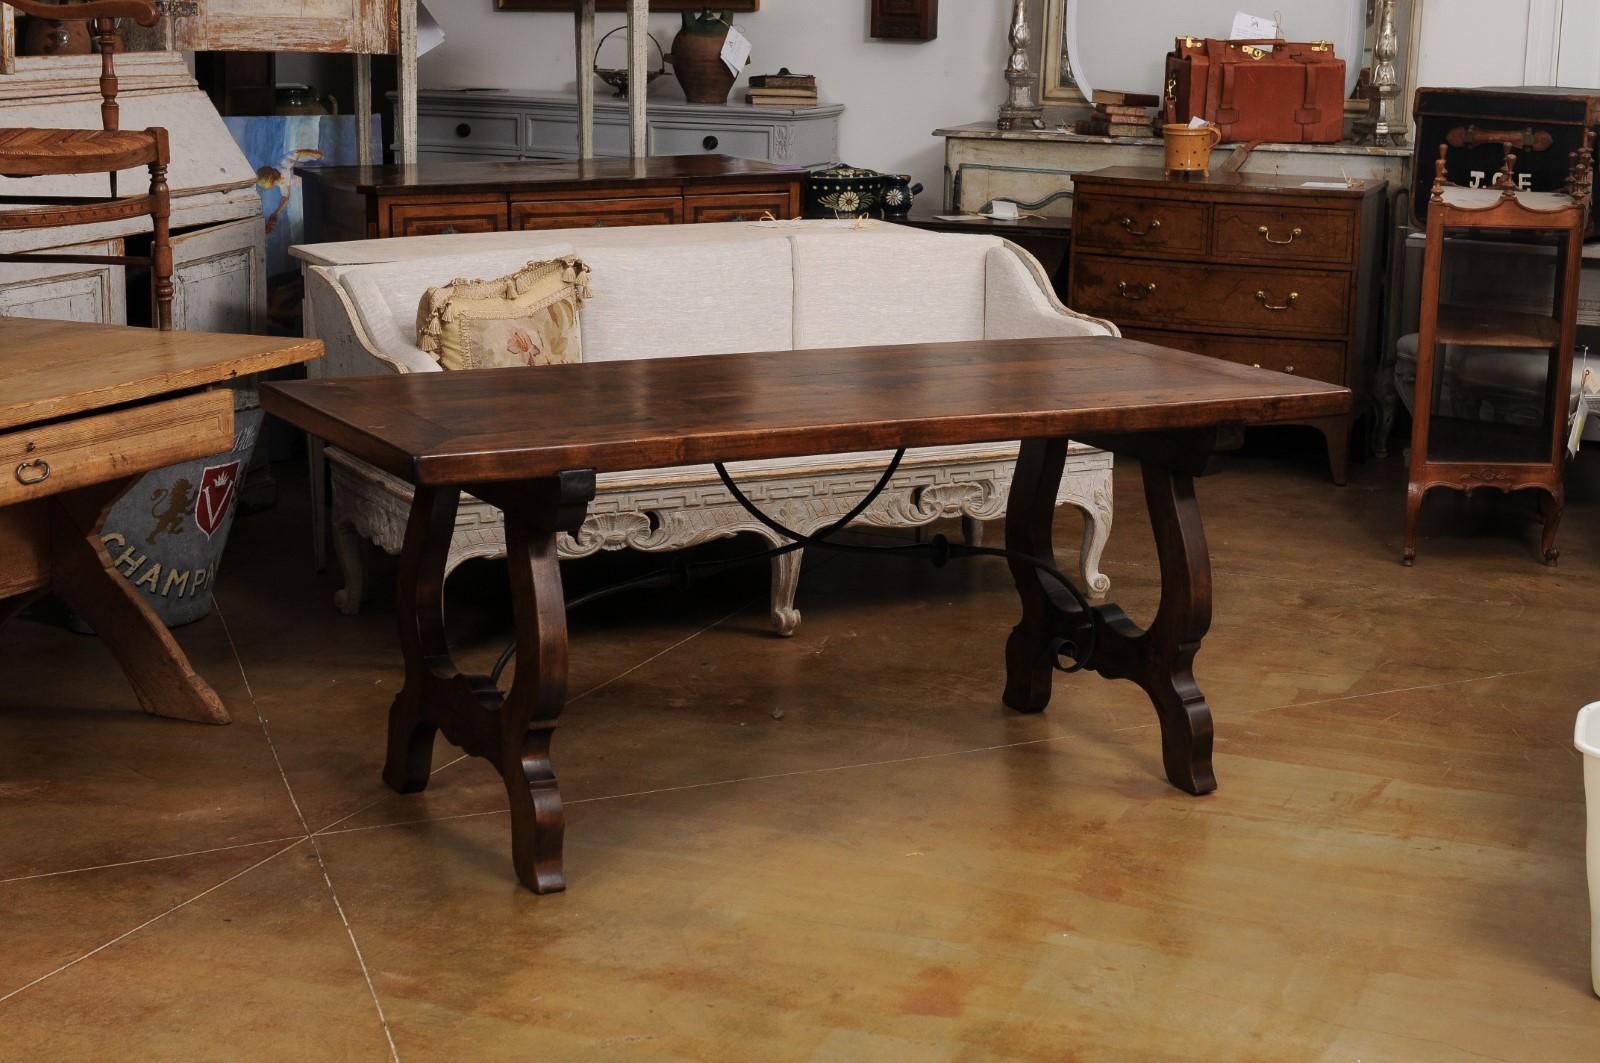 Baroque Table Fratino de style baroque espagnol avec base en forme de lyre et traverse en fer en vente